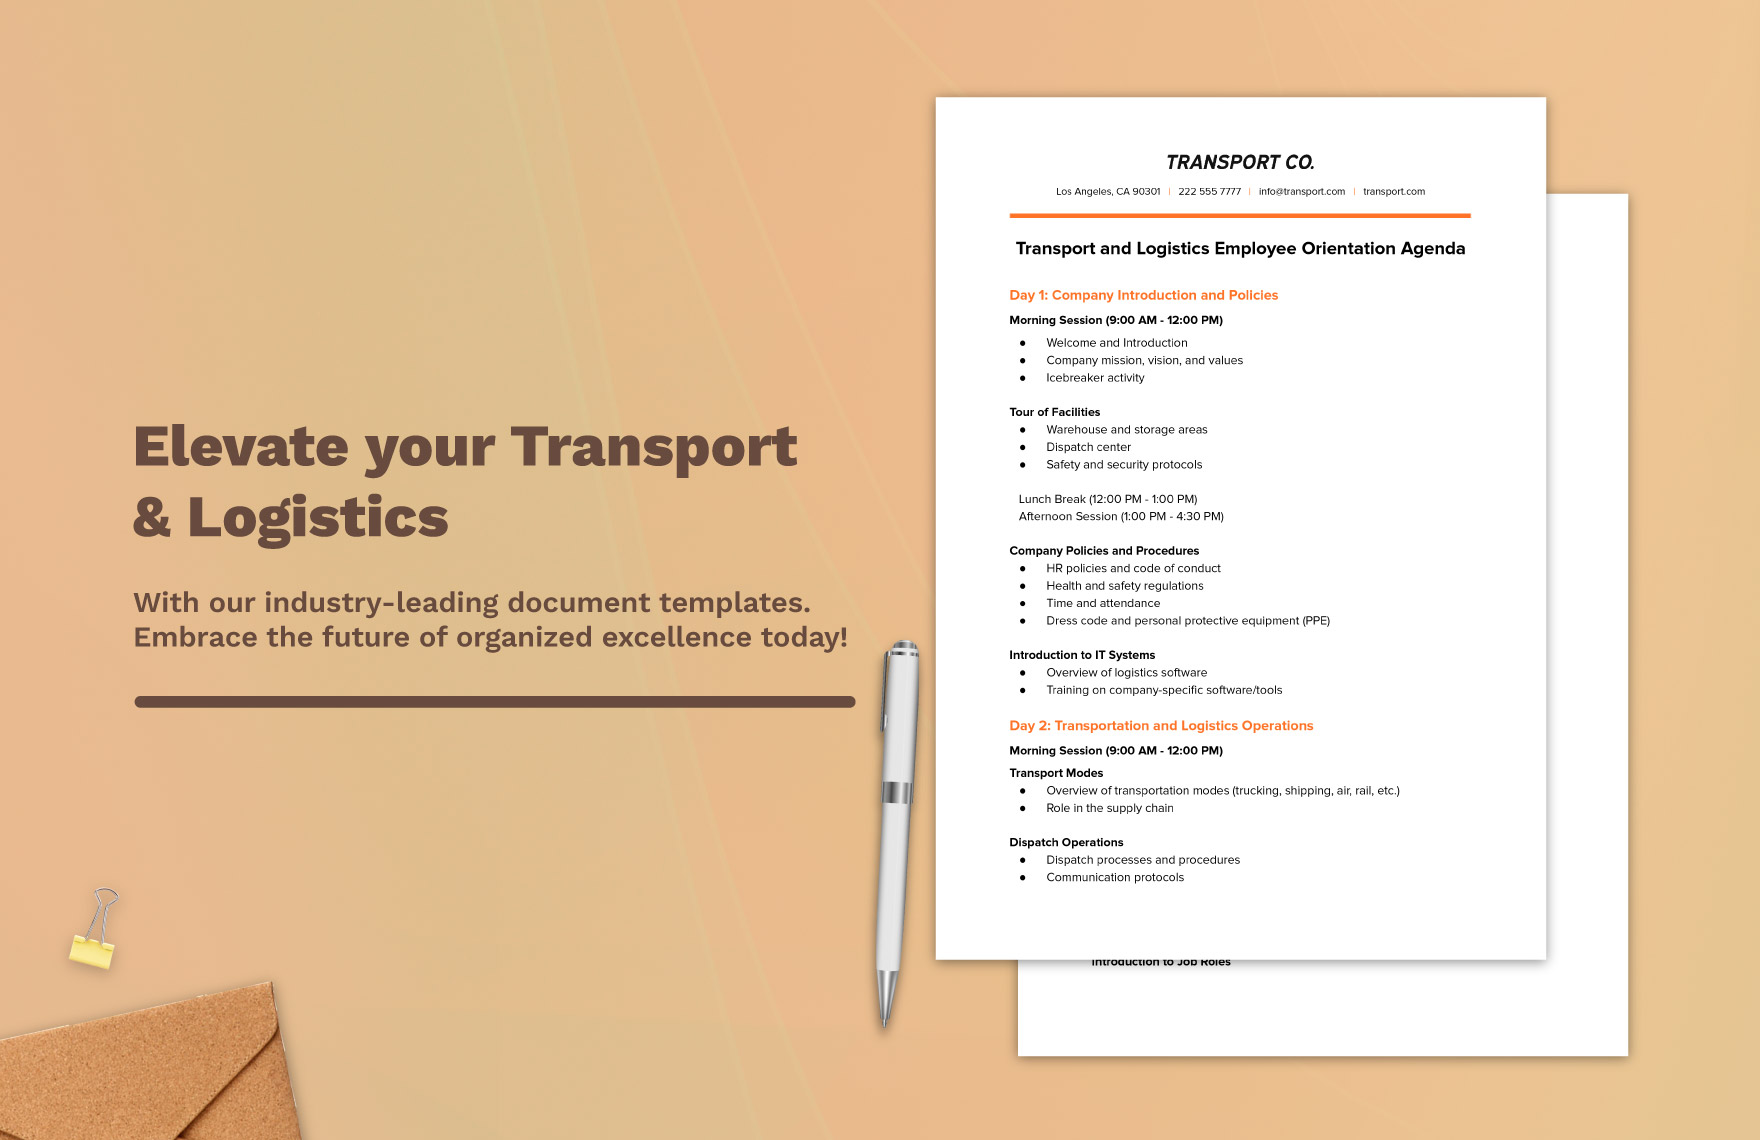 Transport and Logistics Employee Orientation Agenda Template